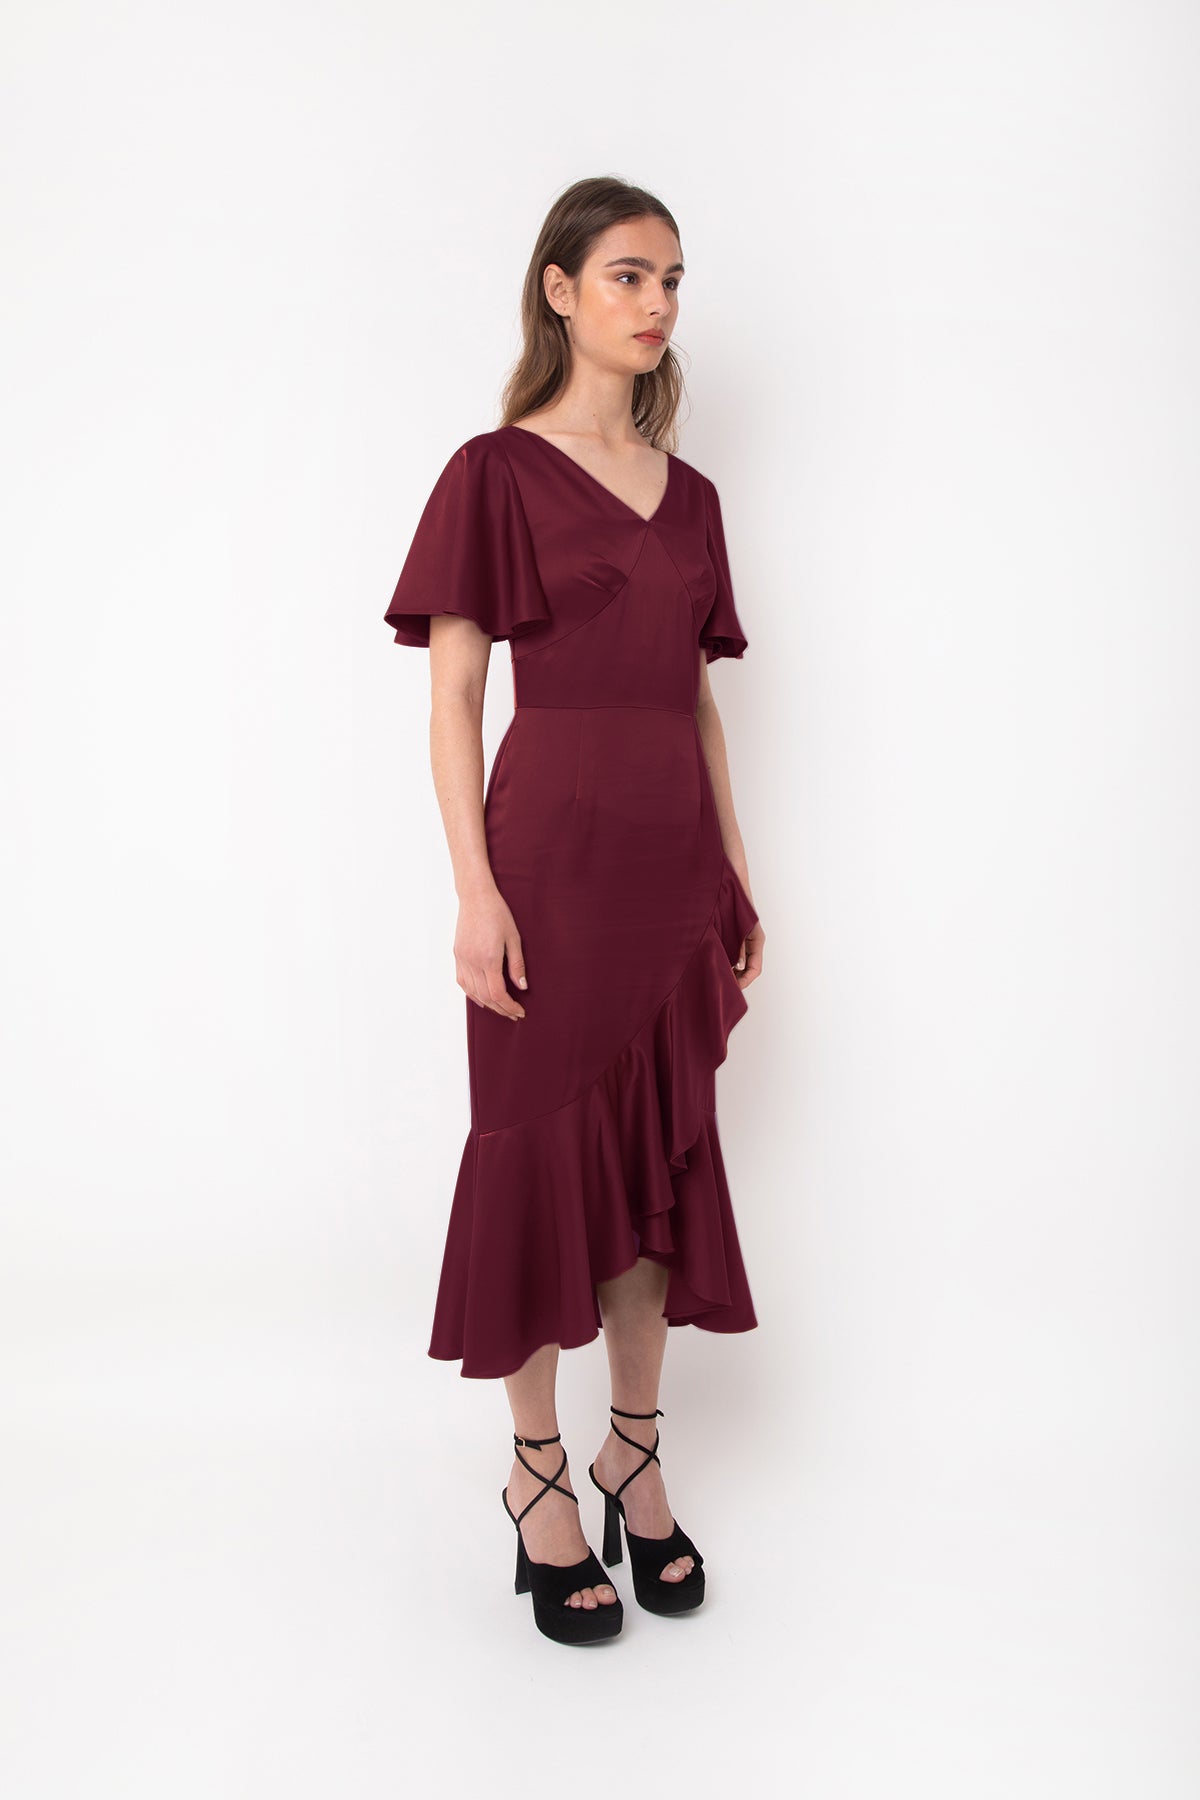 Eden Burgundy Satin Midi Tea Dress - An Elegant Style for Every Occasion | AmyLynn